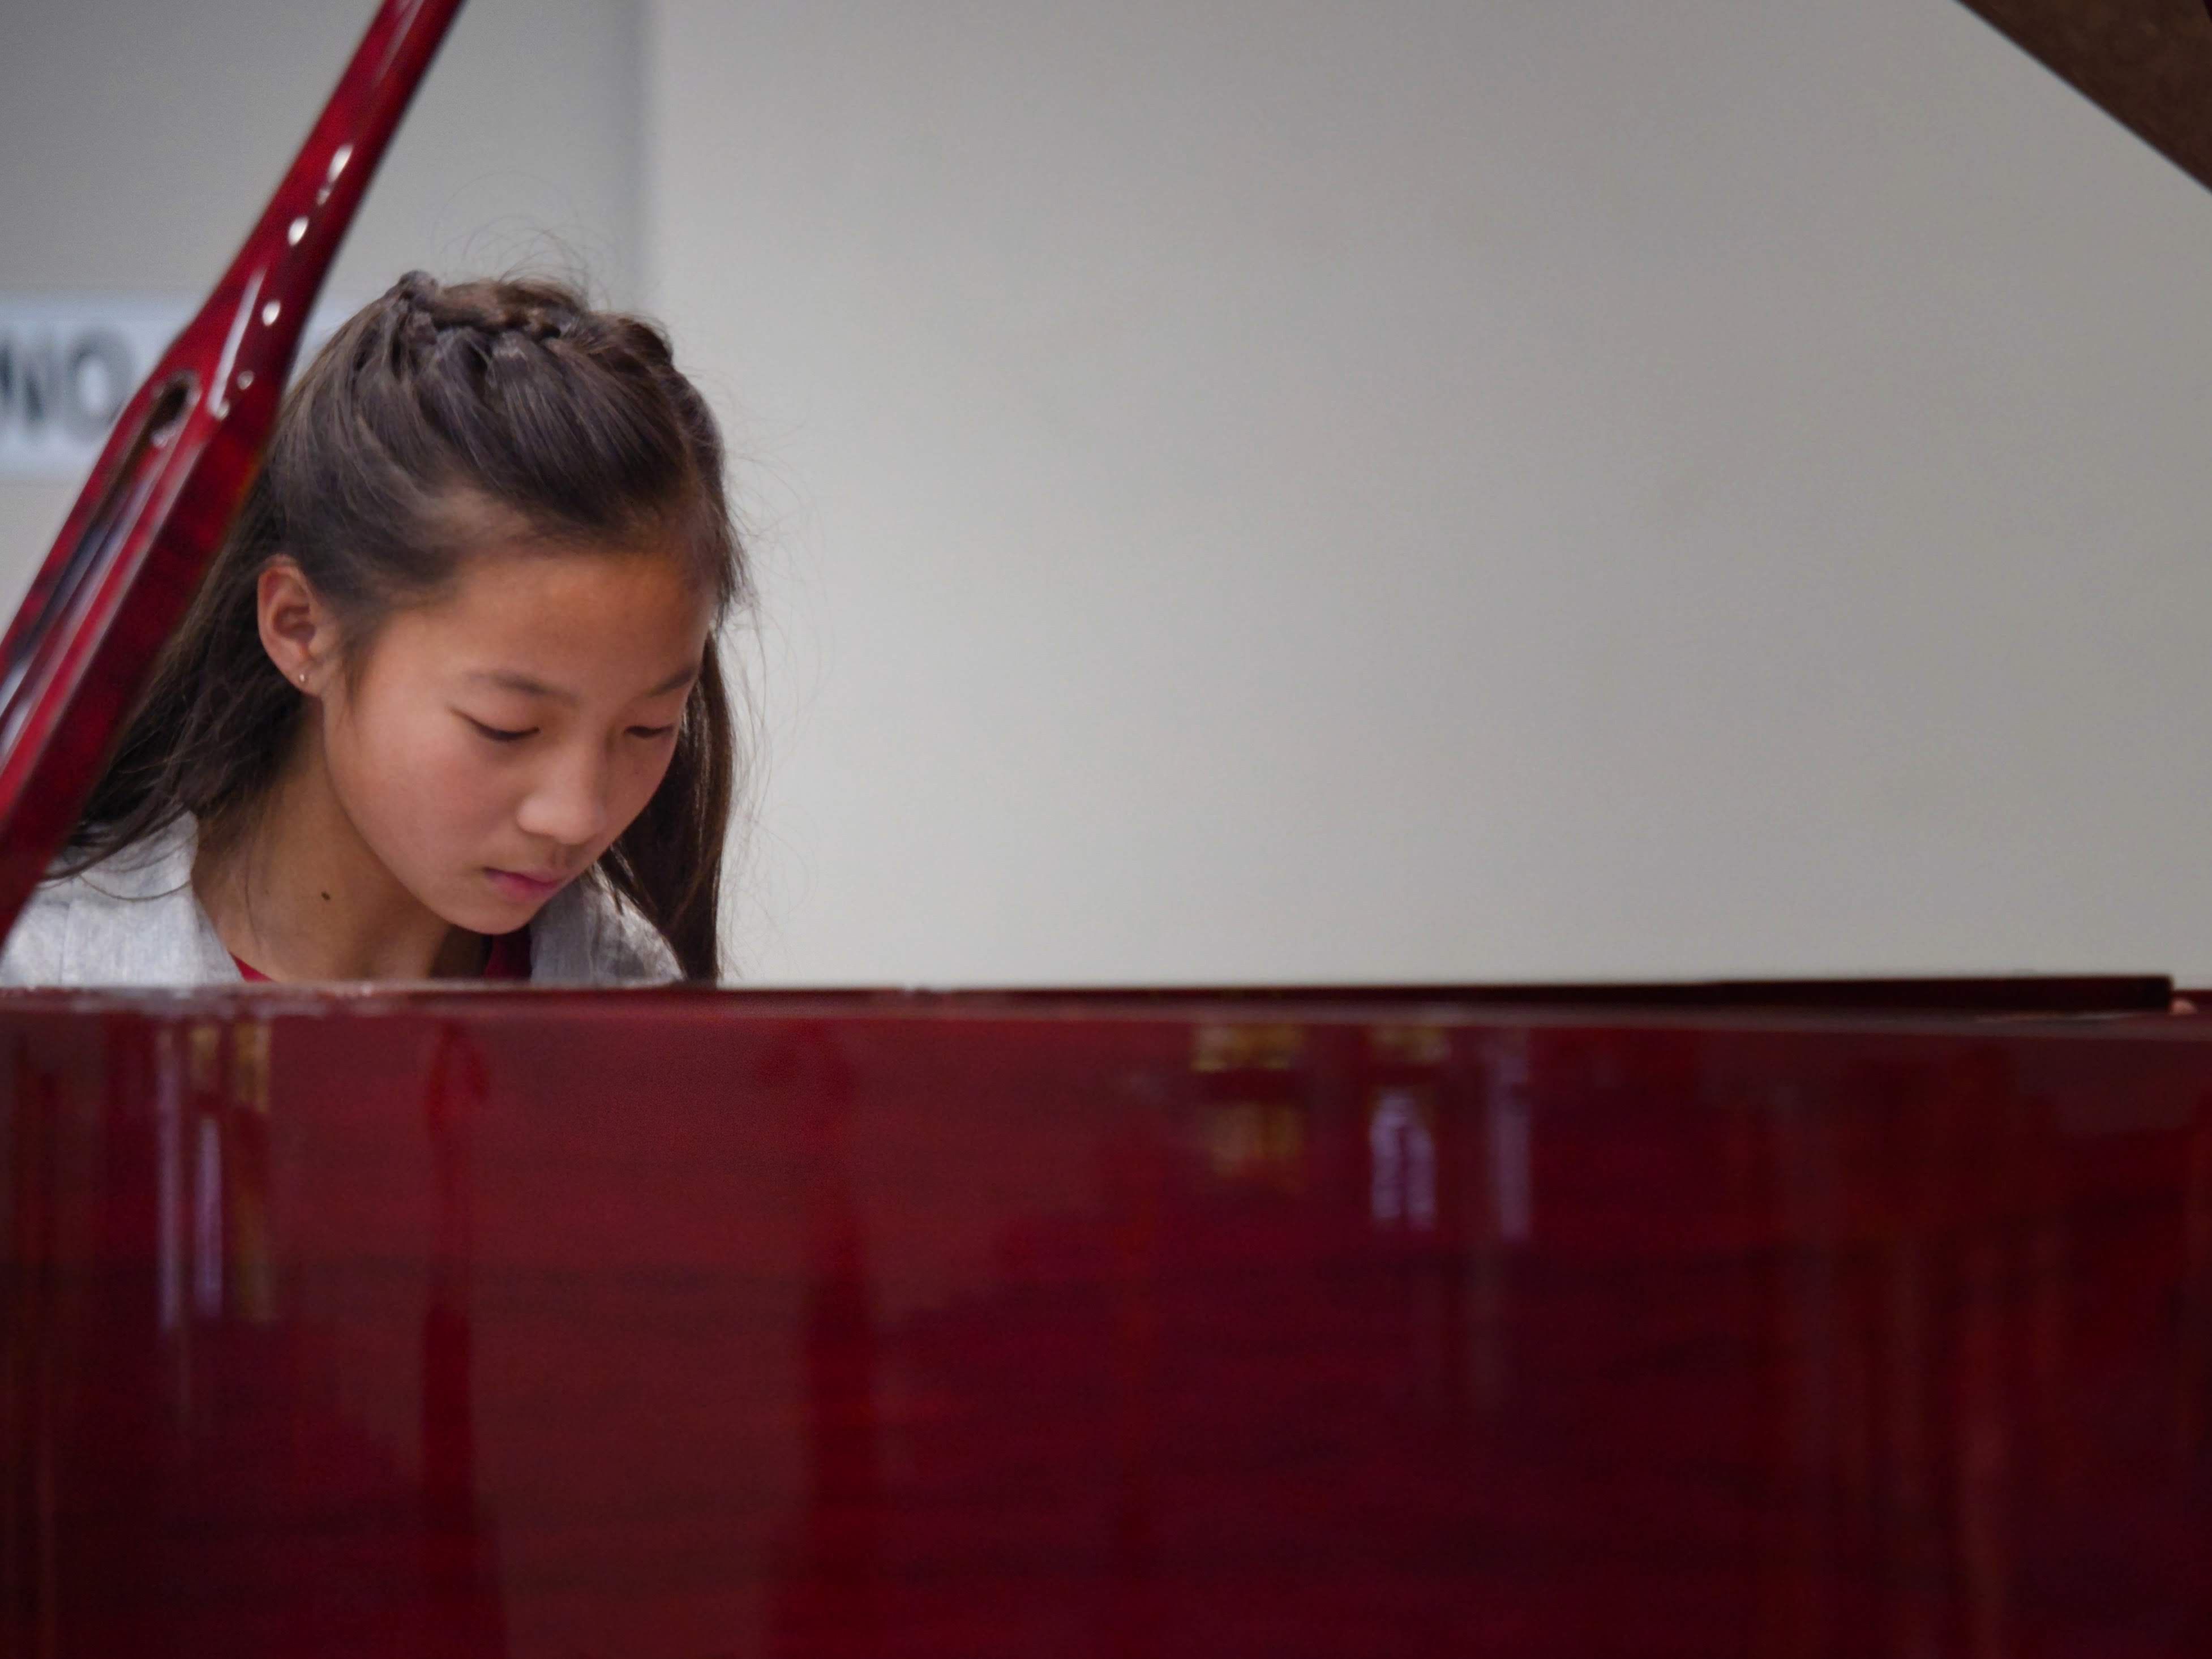 WGE Pianoforte Day 1 Giovanna Wijaya Displays her skills on the Piano